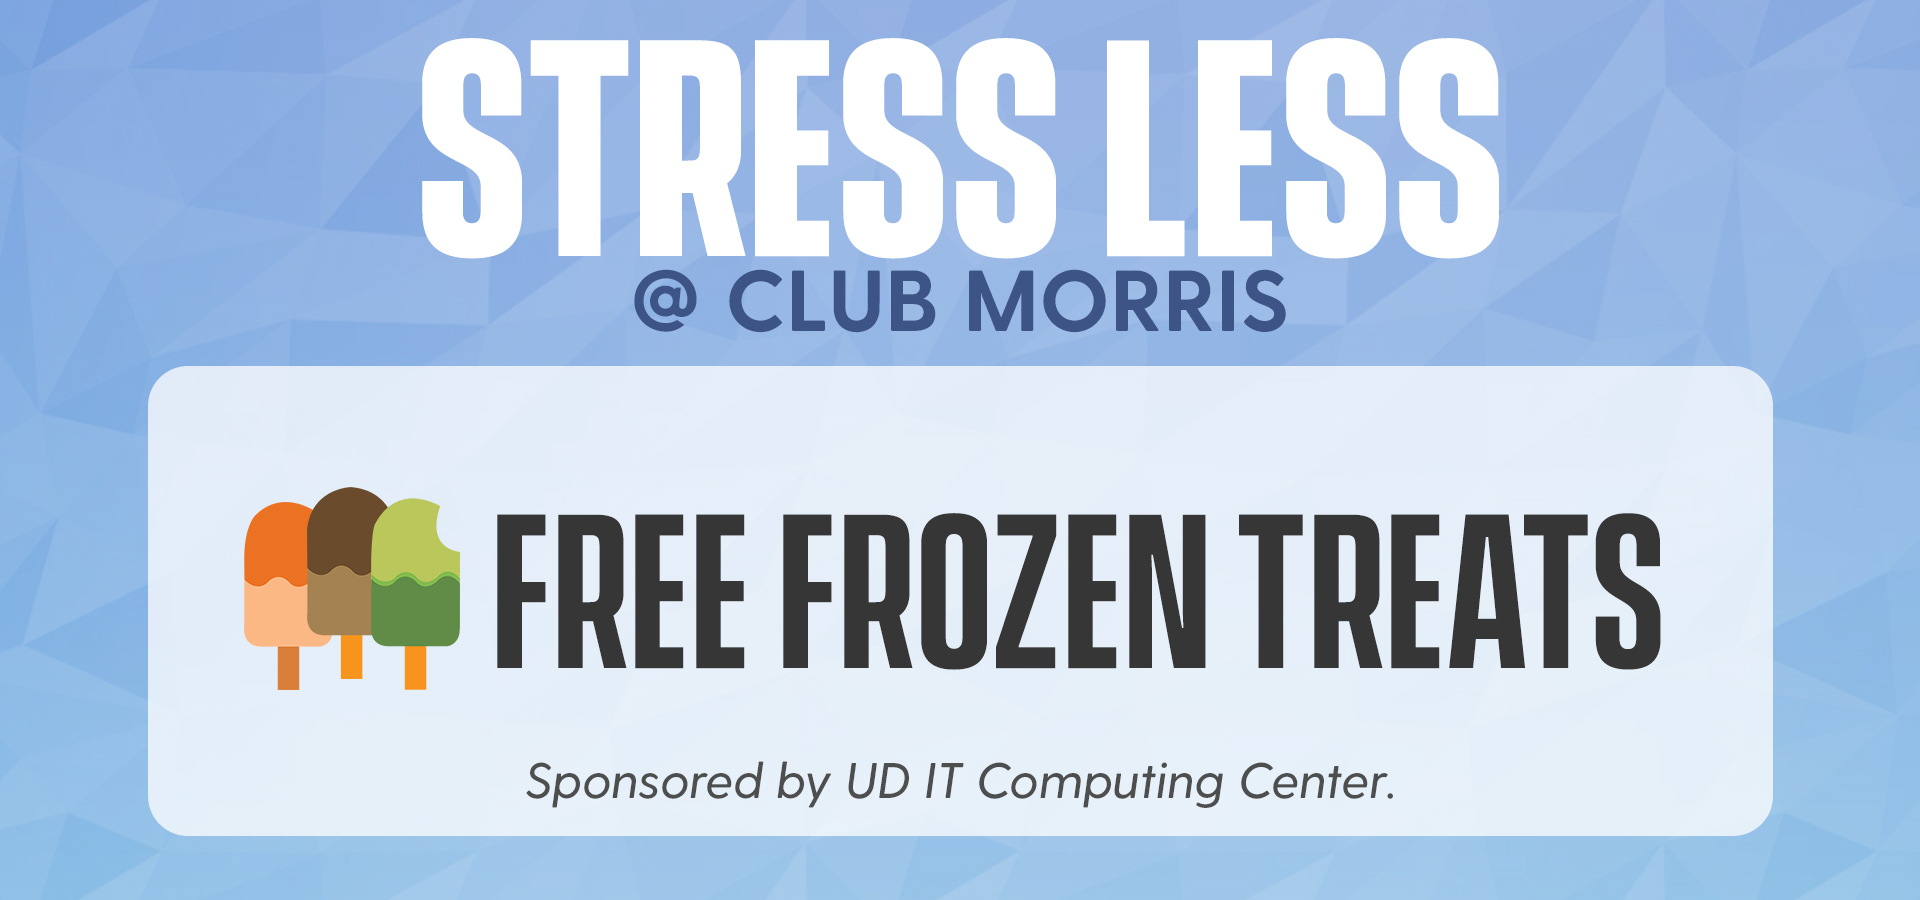 Free Frozen Treats Promotional Image